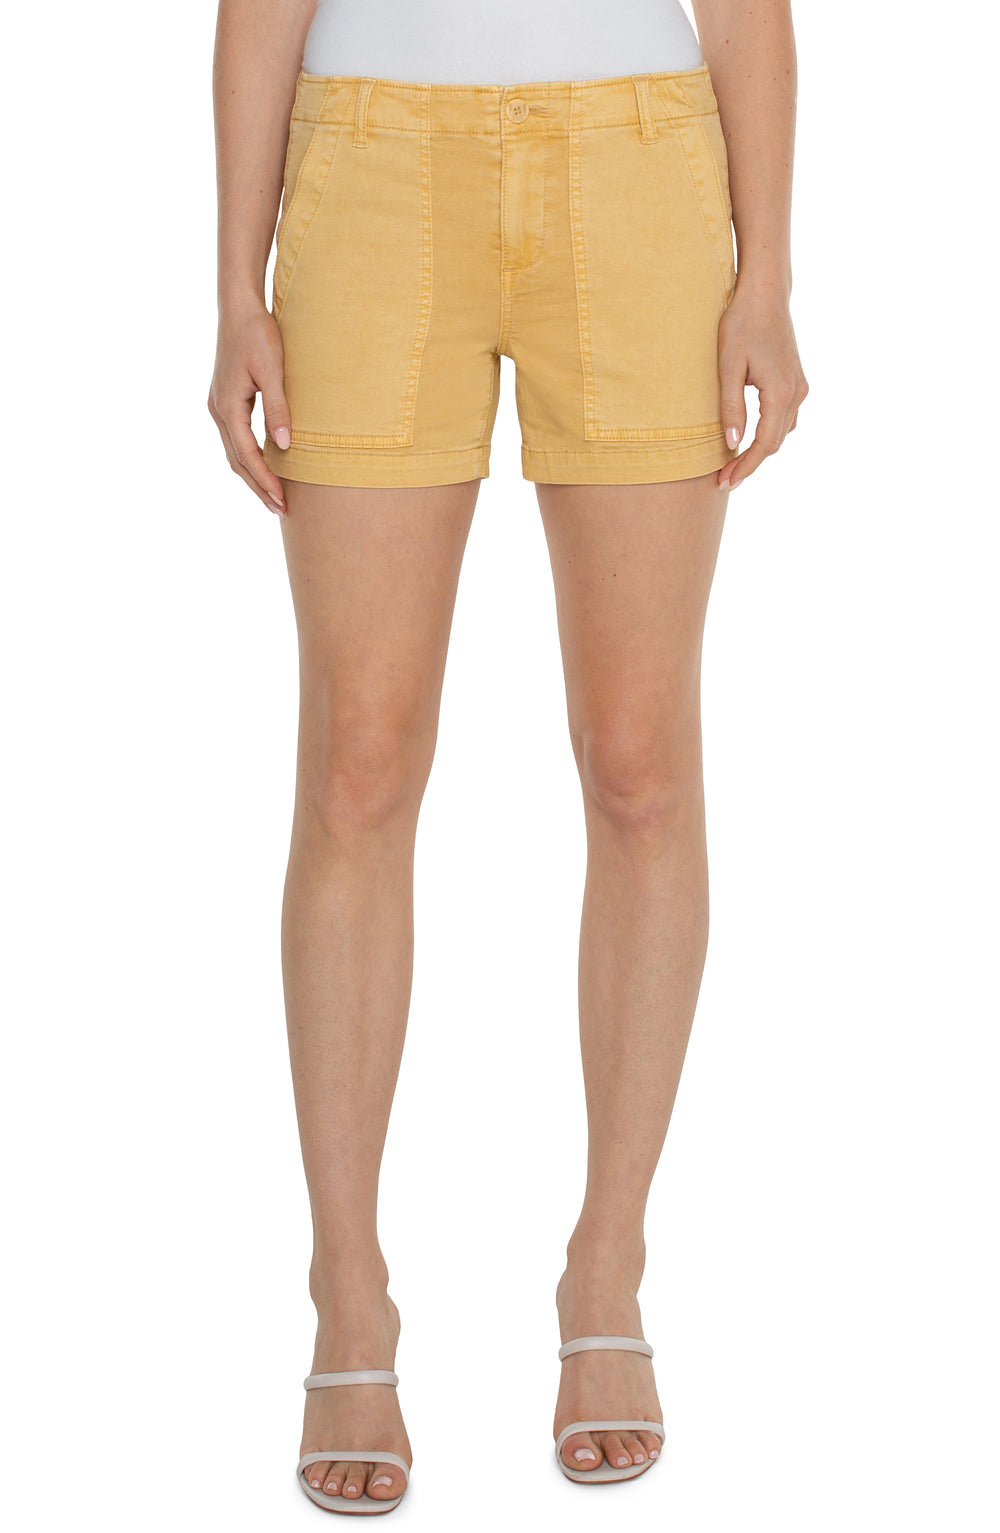 Flaxen gold utility shorts - Tru Blue Boutique